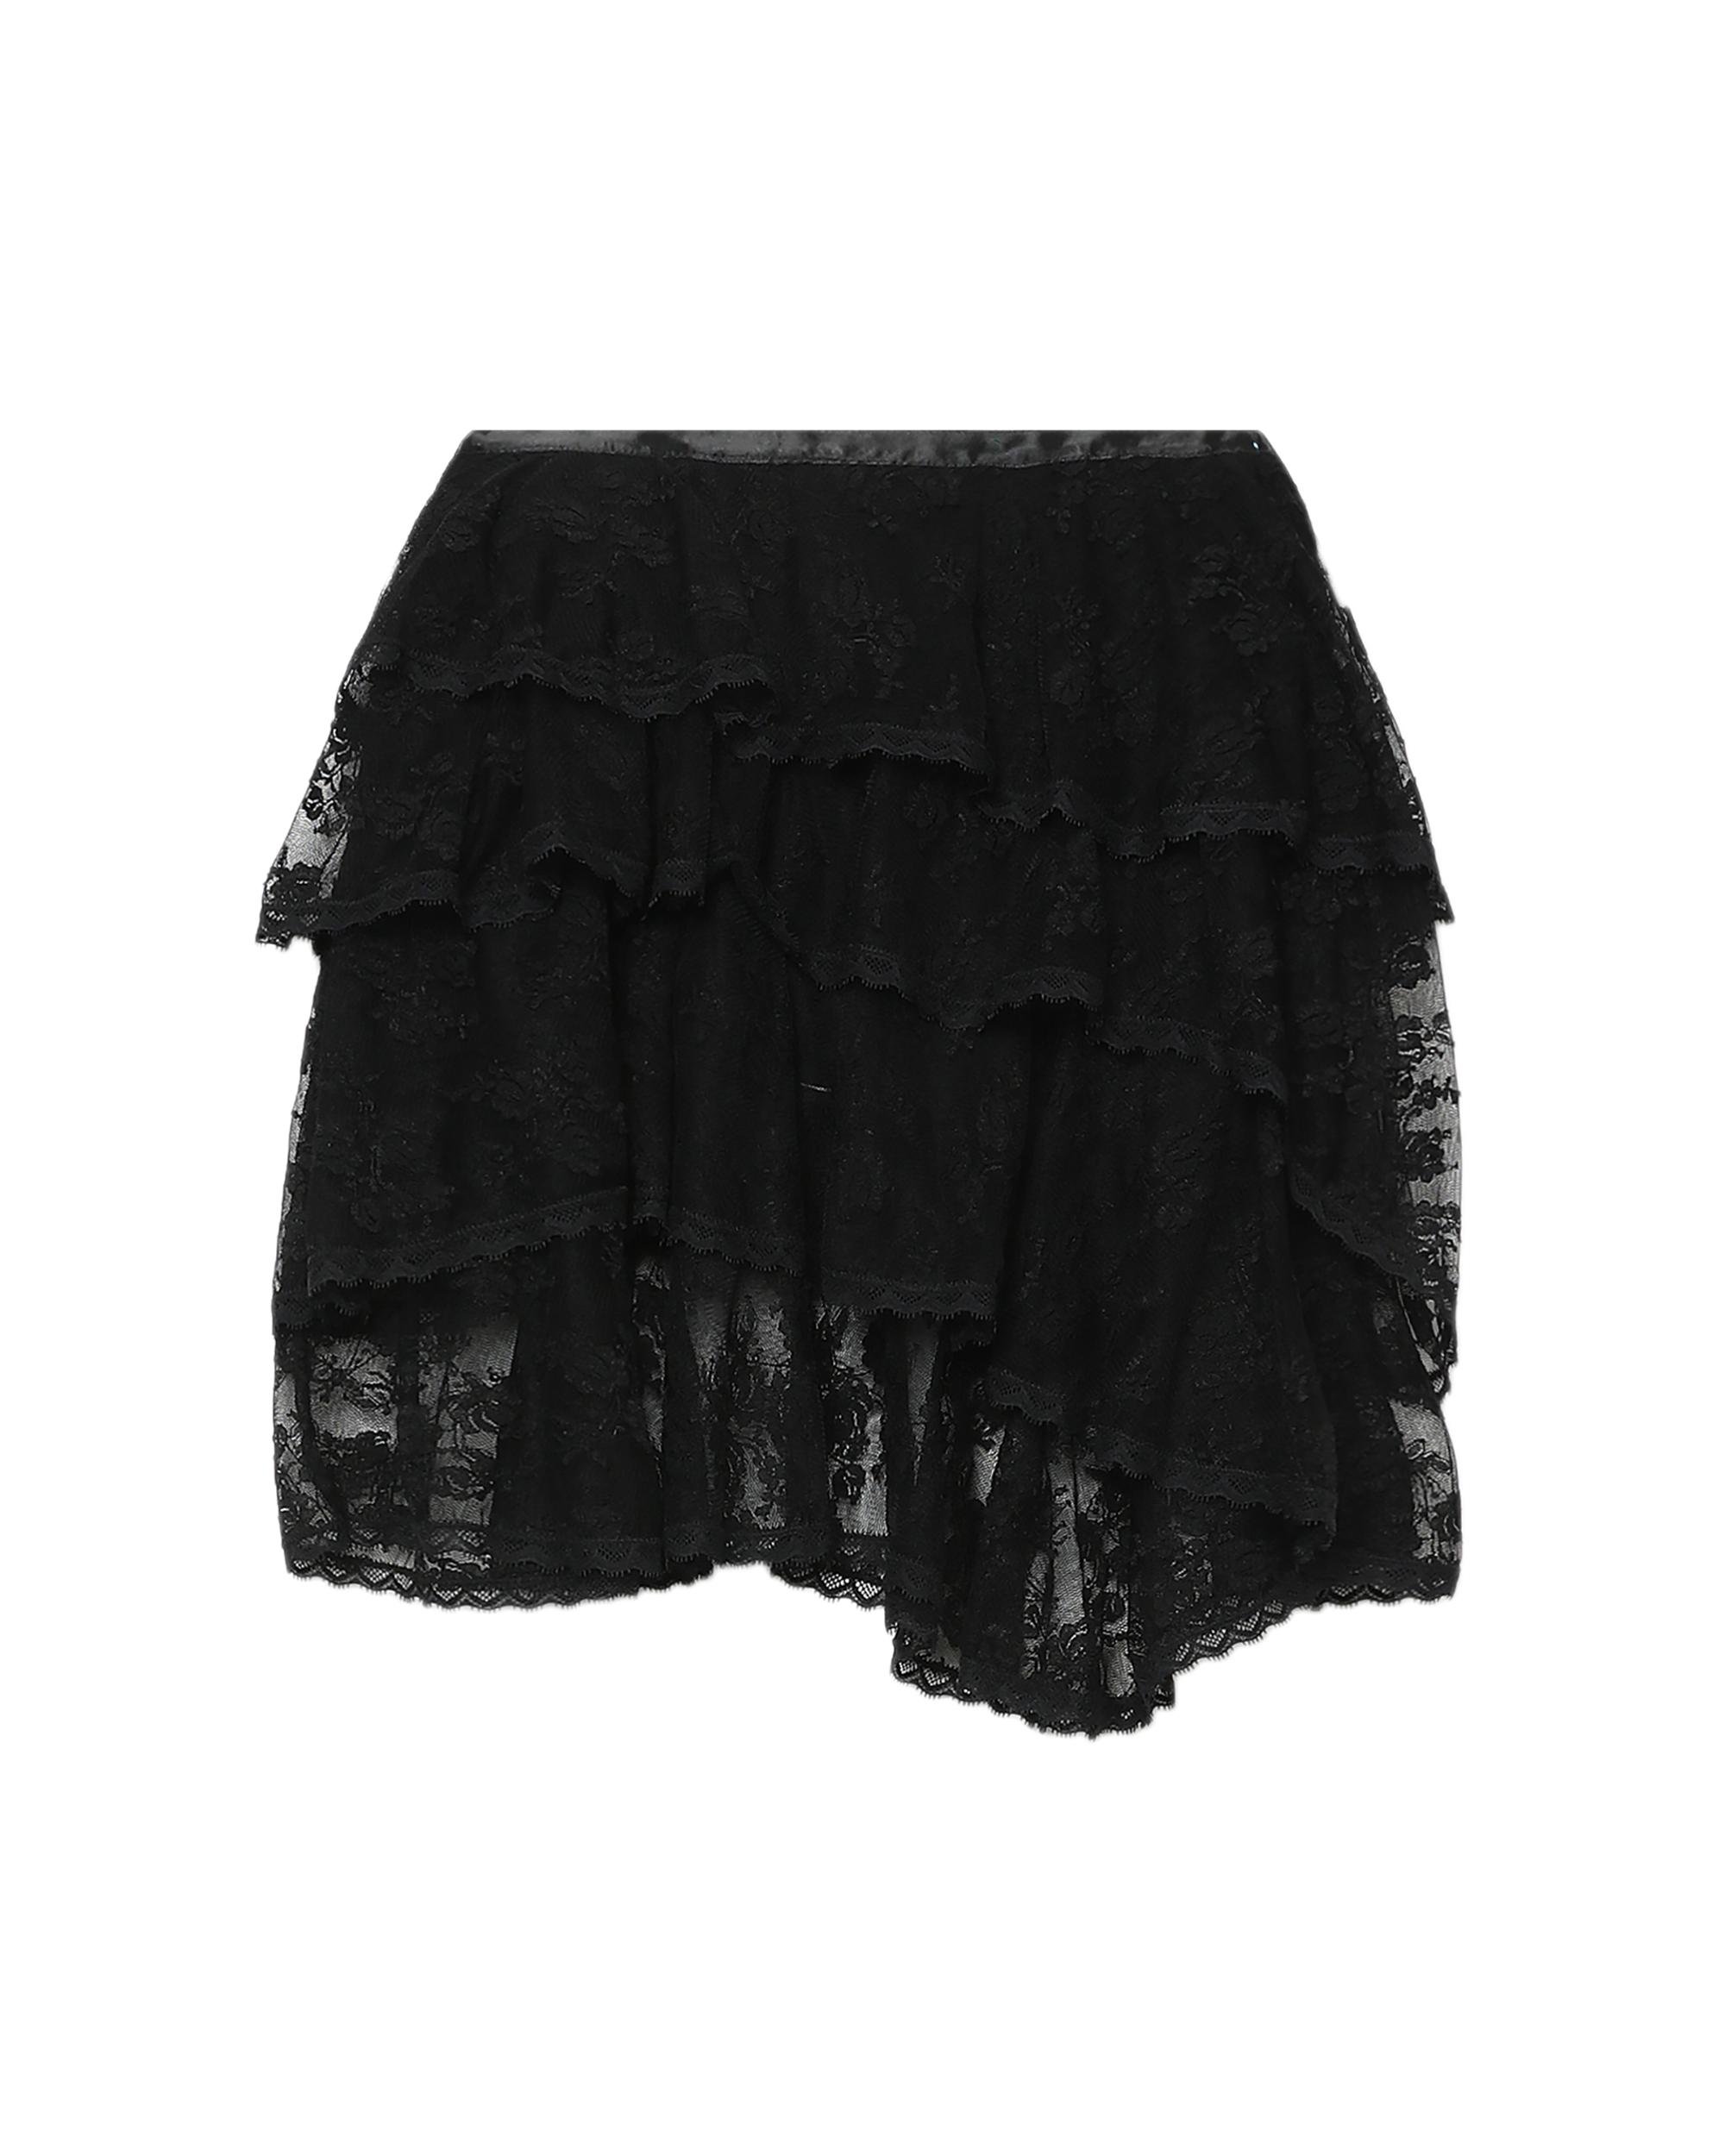 Tiered mini skirt by YUHAN WANG